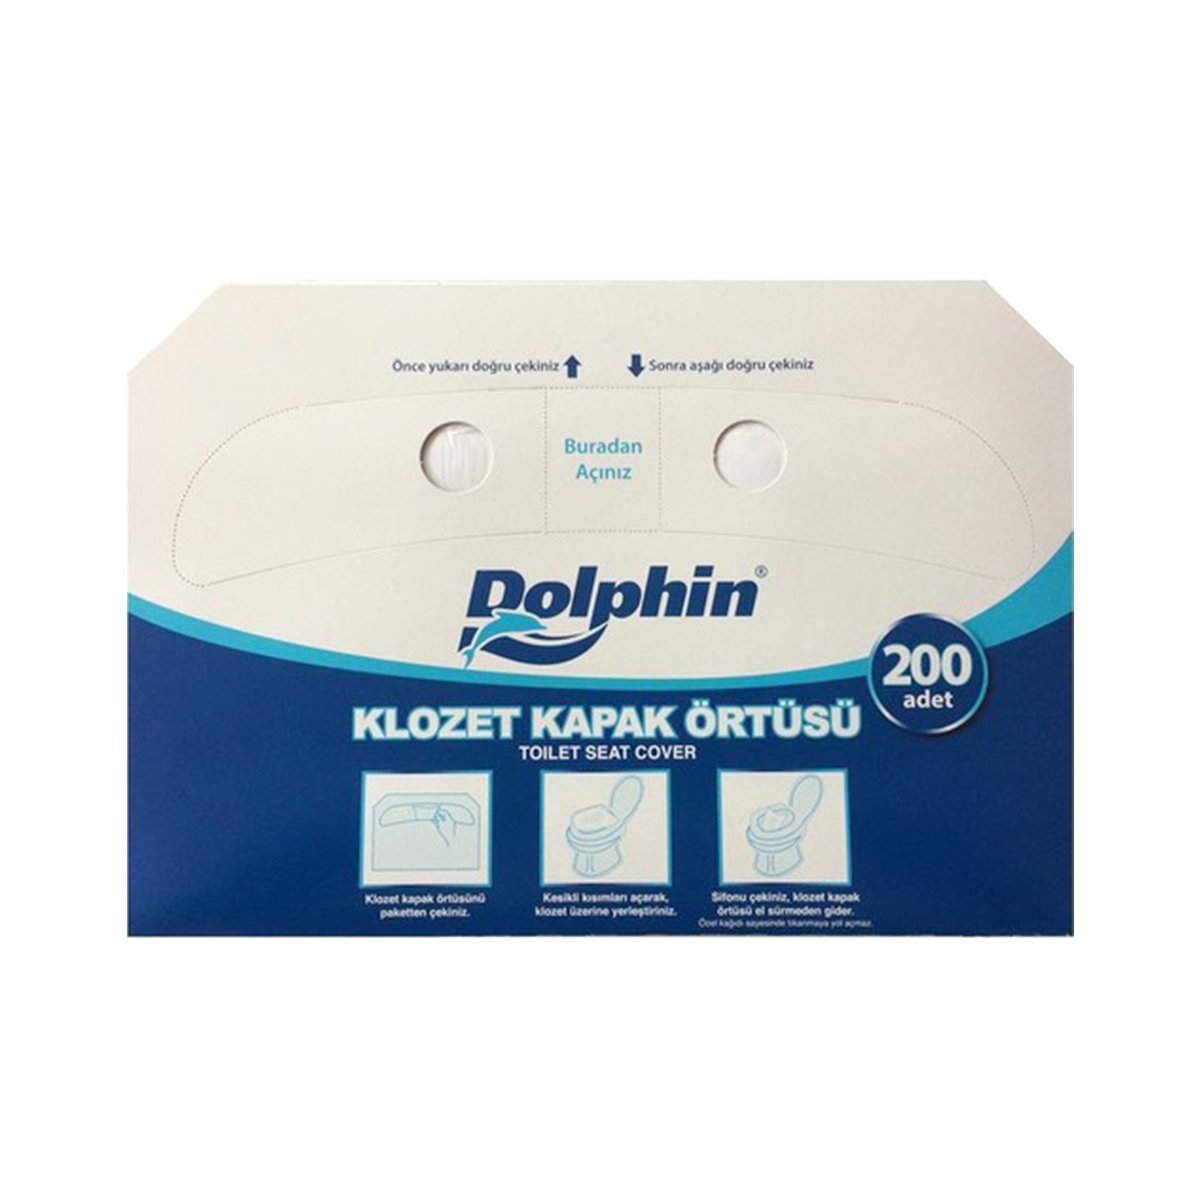 Dolphin Kağıt Klozet Kapak Örtüsü 200'lü